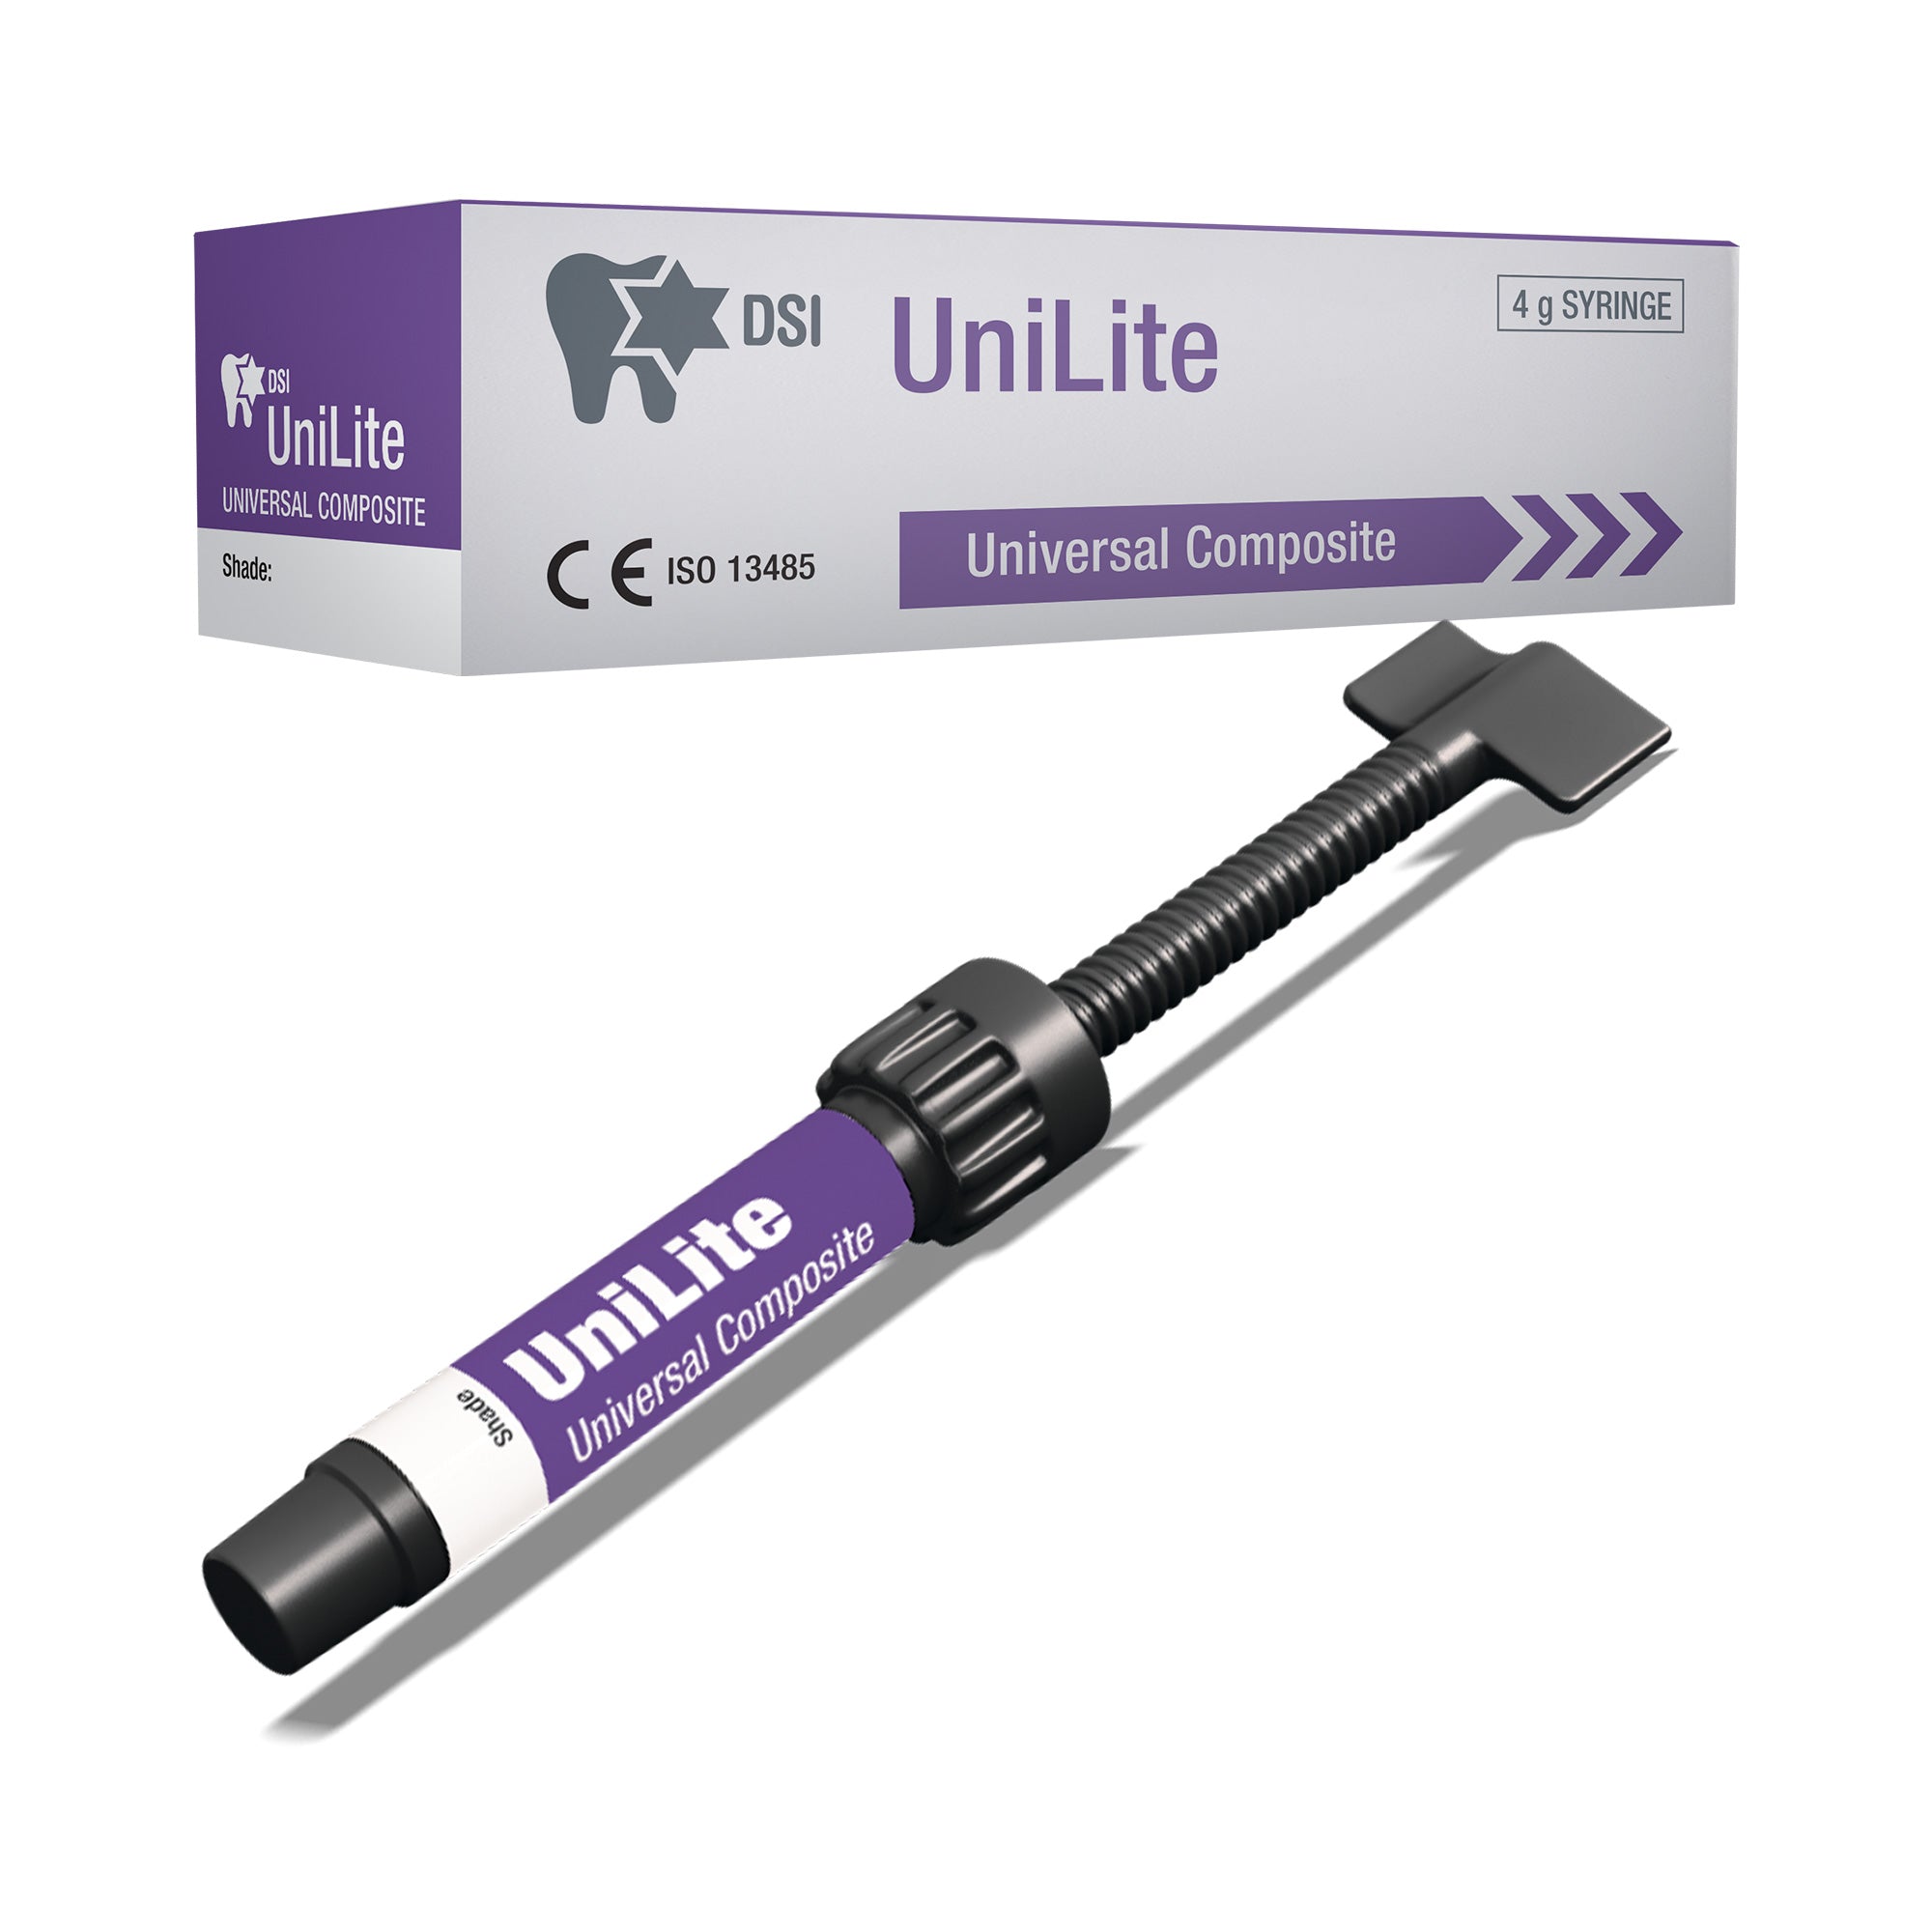 DSI UniLite Micro-Hybrid Composite Restoration Material 4g Syringe